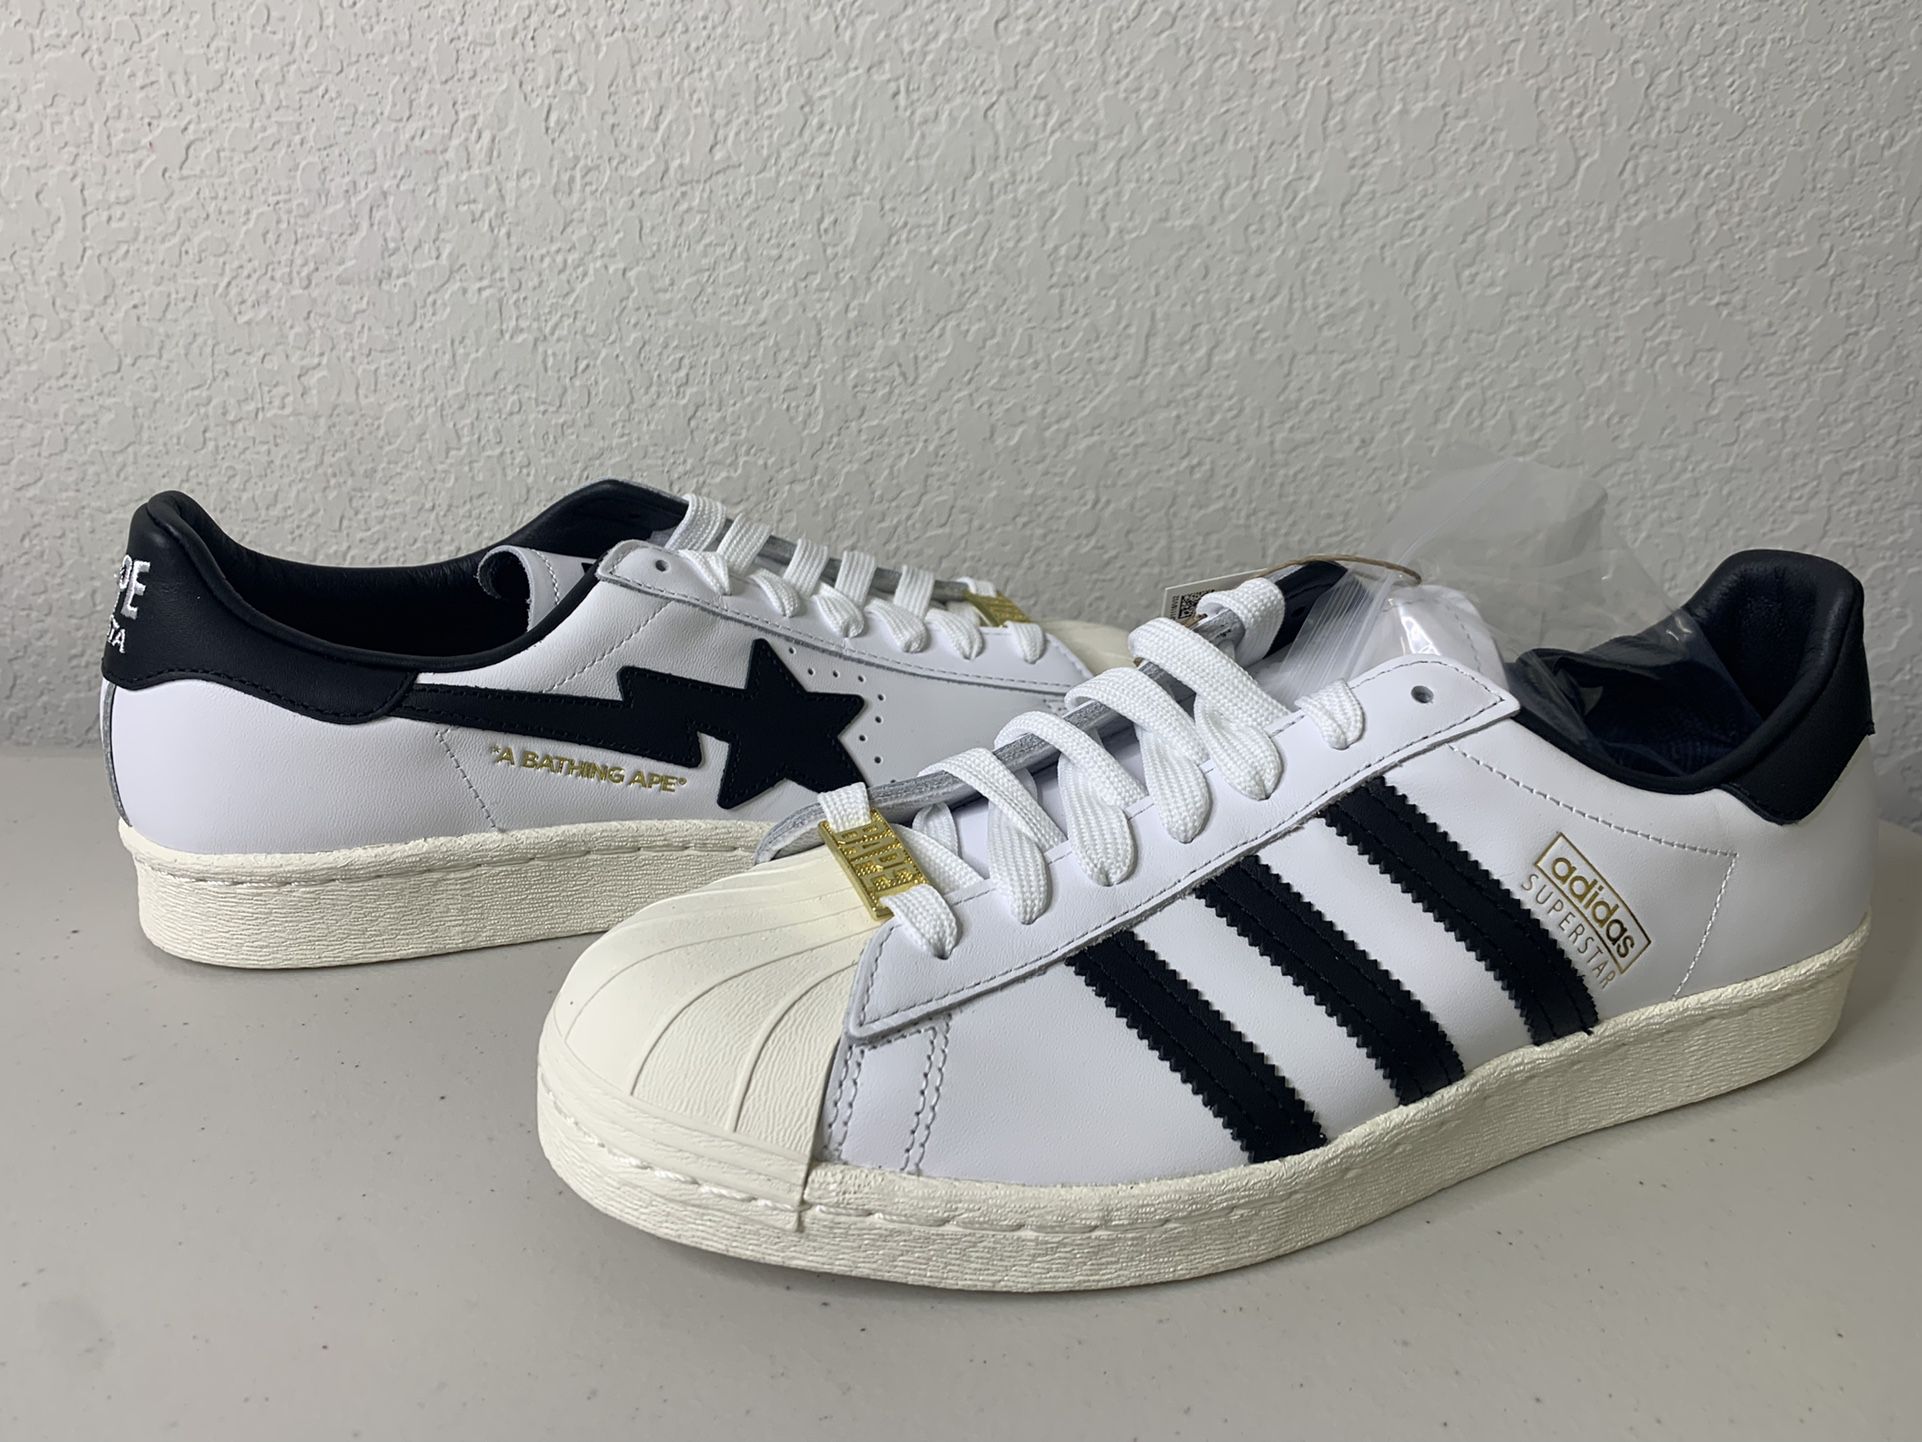 Adidas x BAPE Superstar 80s “White Black” -  Men’s Size 8.5 (GZ8980) NEW